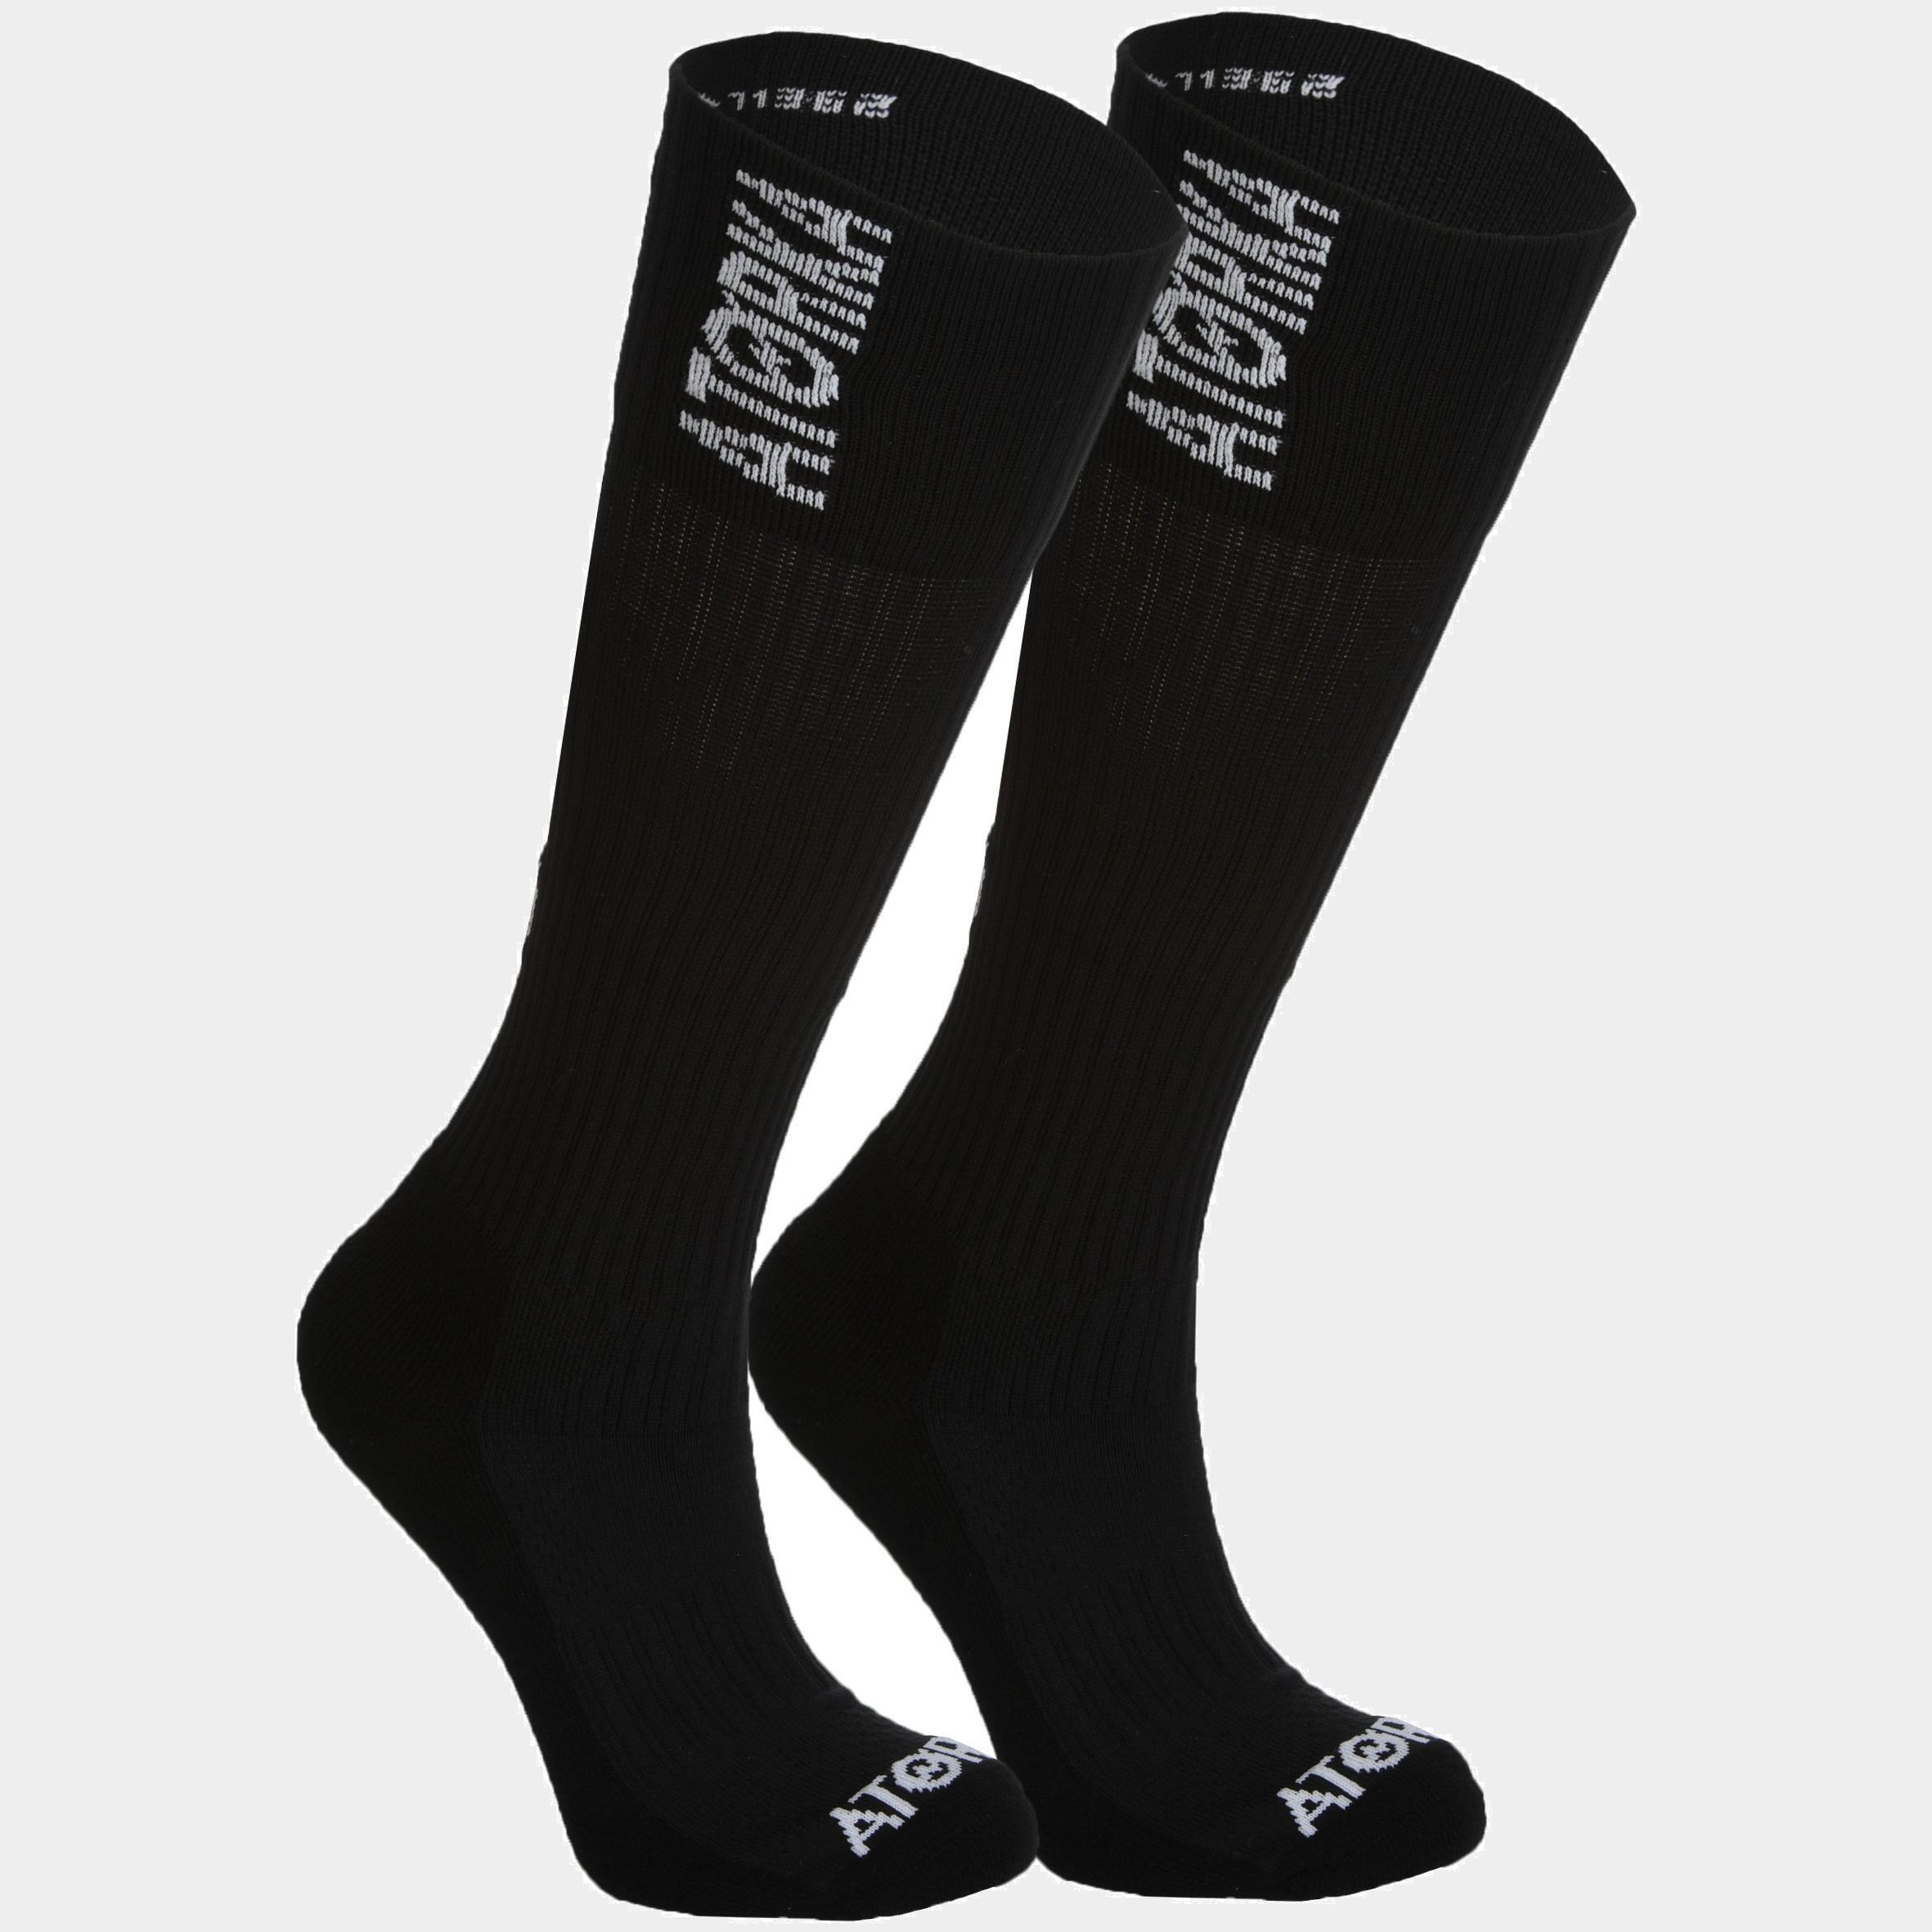 ATORKA High Handball Socks 1 Pair H500 - Black